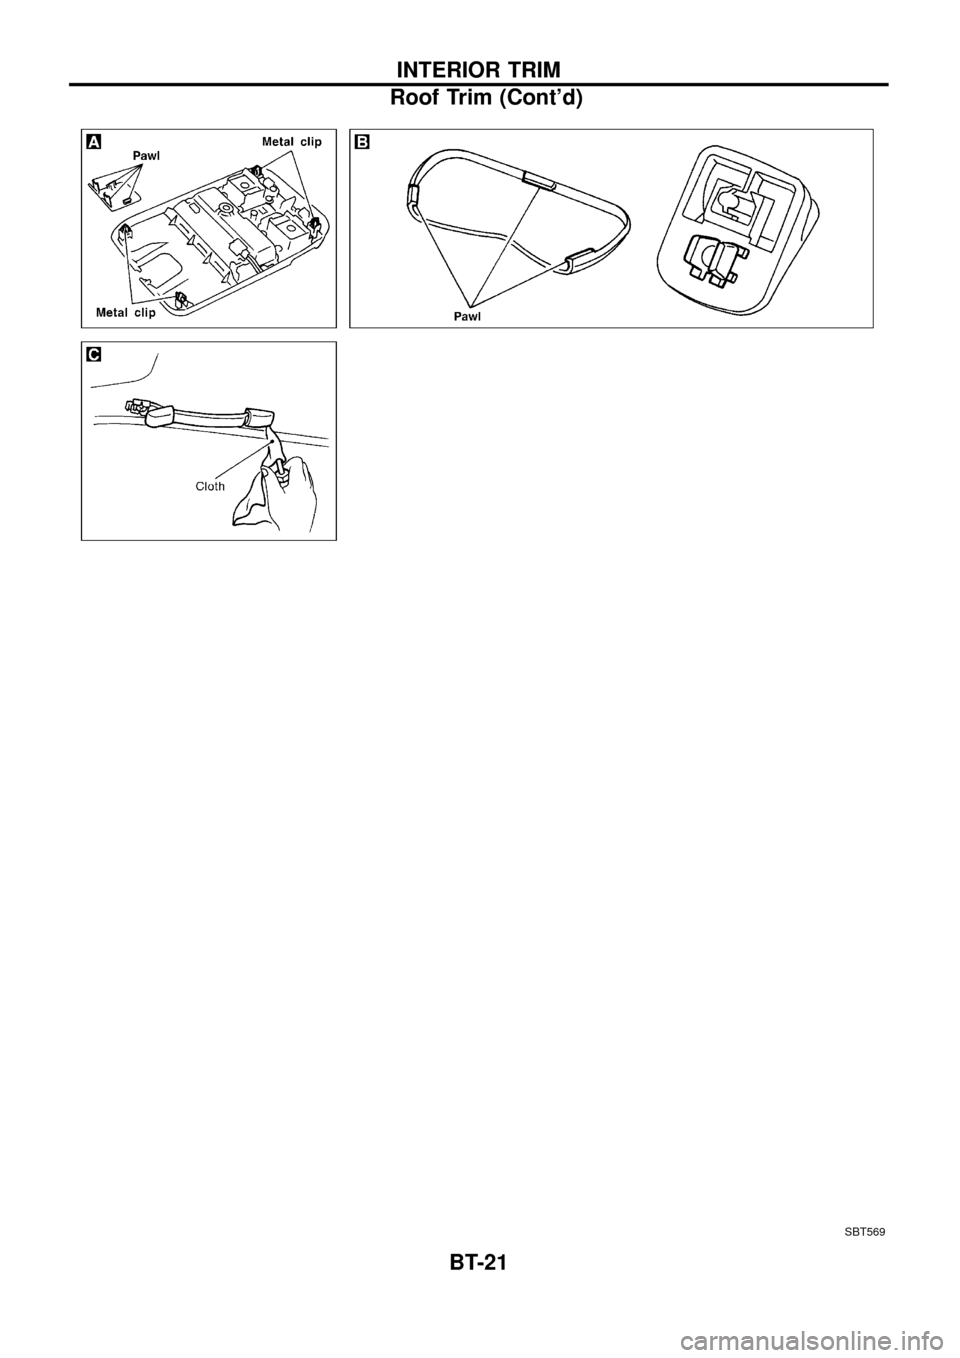 NISSAN PATROL 1998 Y61 / 5.G Body Owners Manual SBT569
INTERIOR TRIM
Roof Trim (Contd)
BT-21 